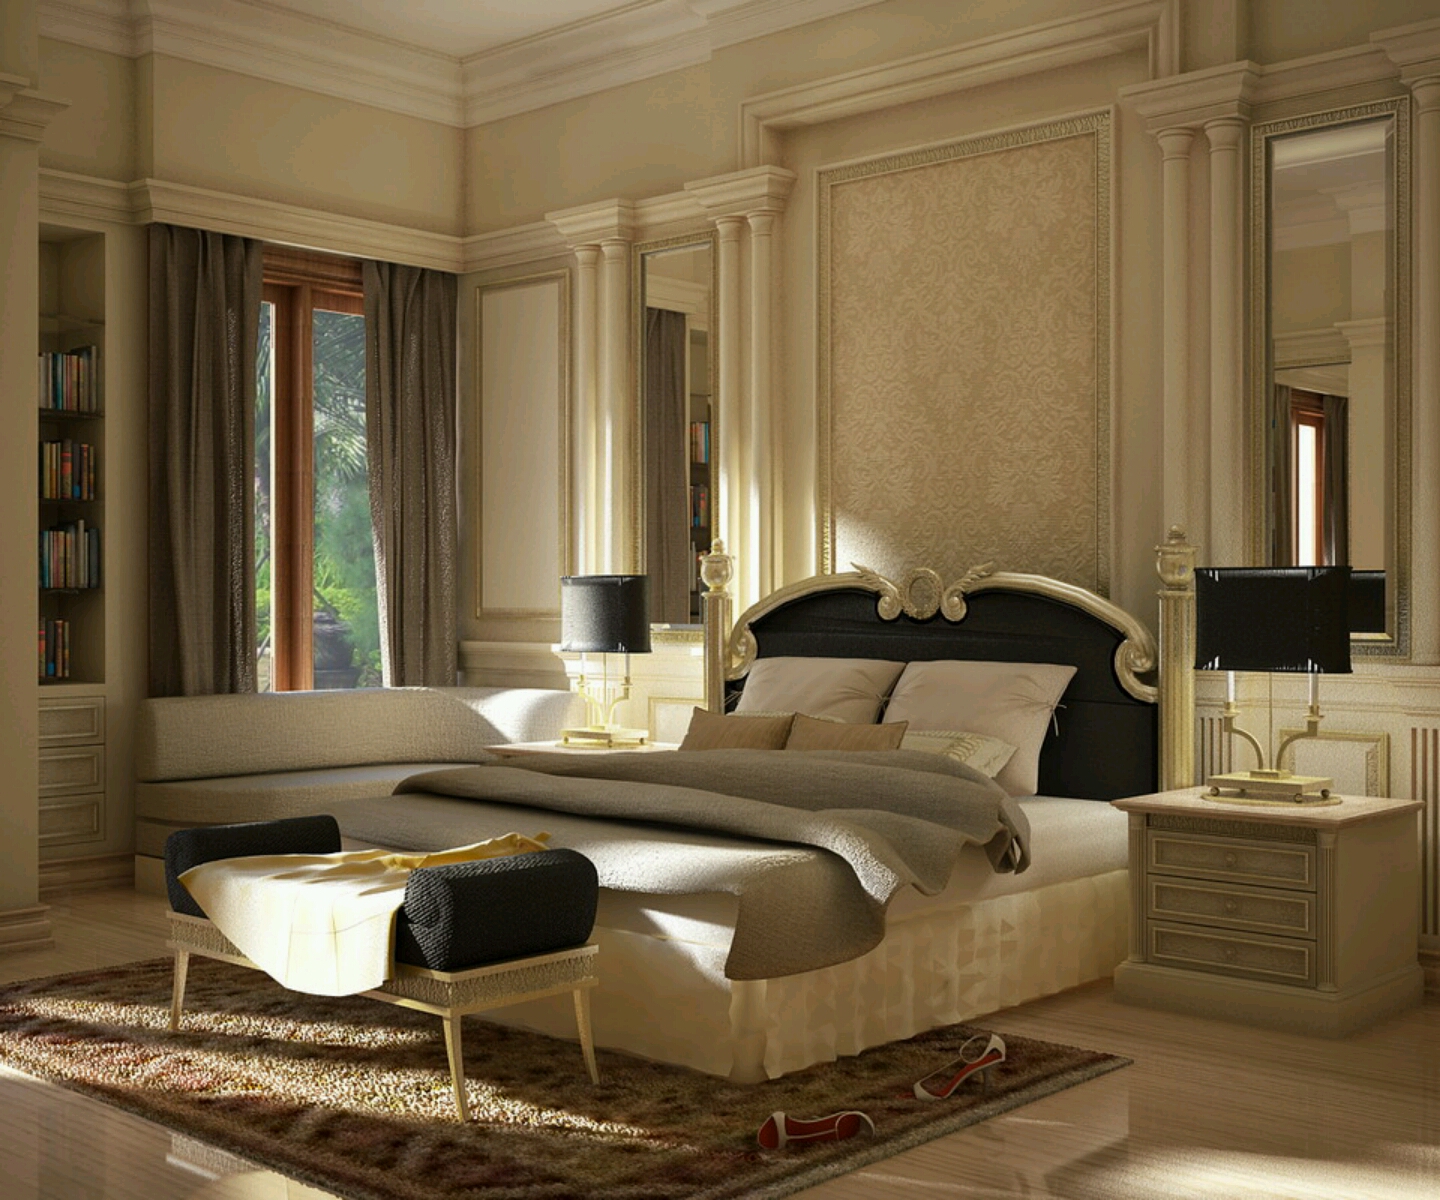 Modern luxury bedroom furniture designs ideas. ~ Furniture Gallery